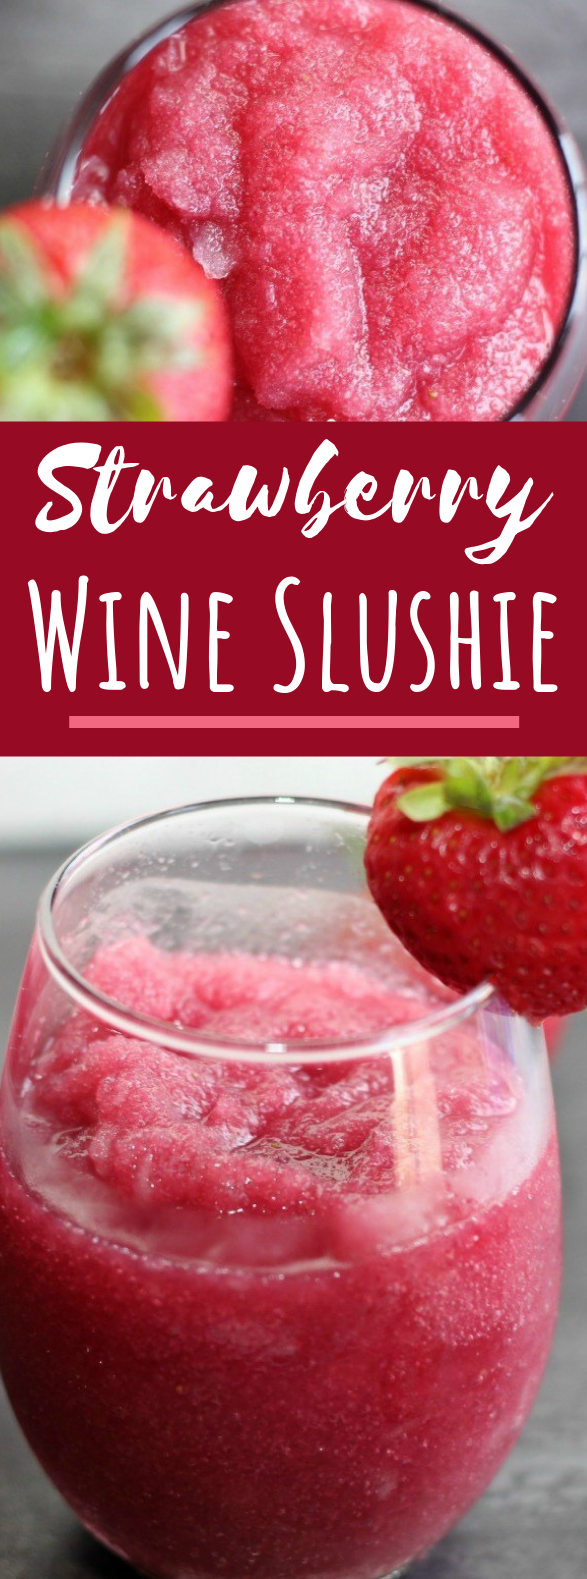 Strawberry Wine Slushie #drinks #alcohol